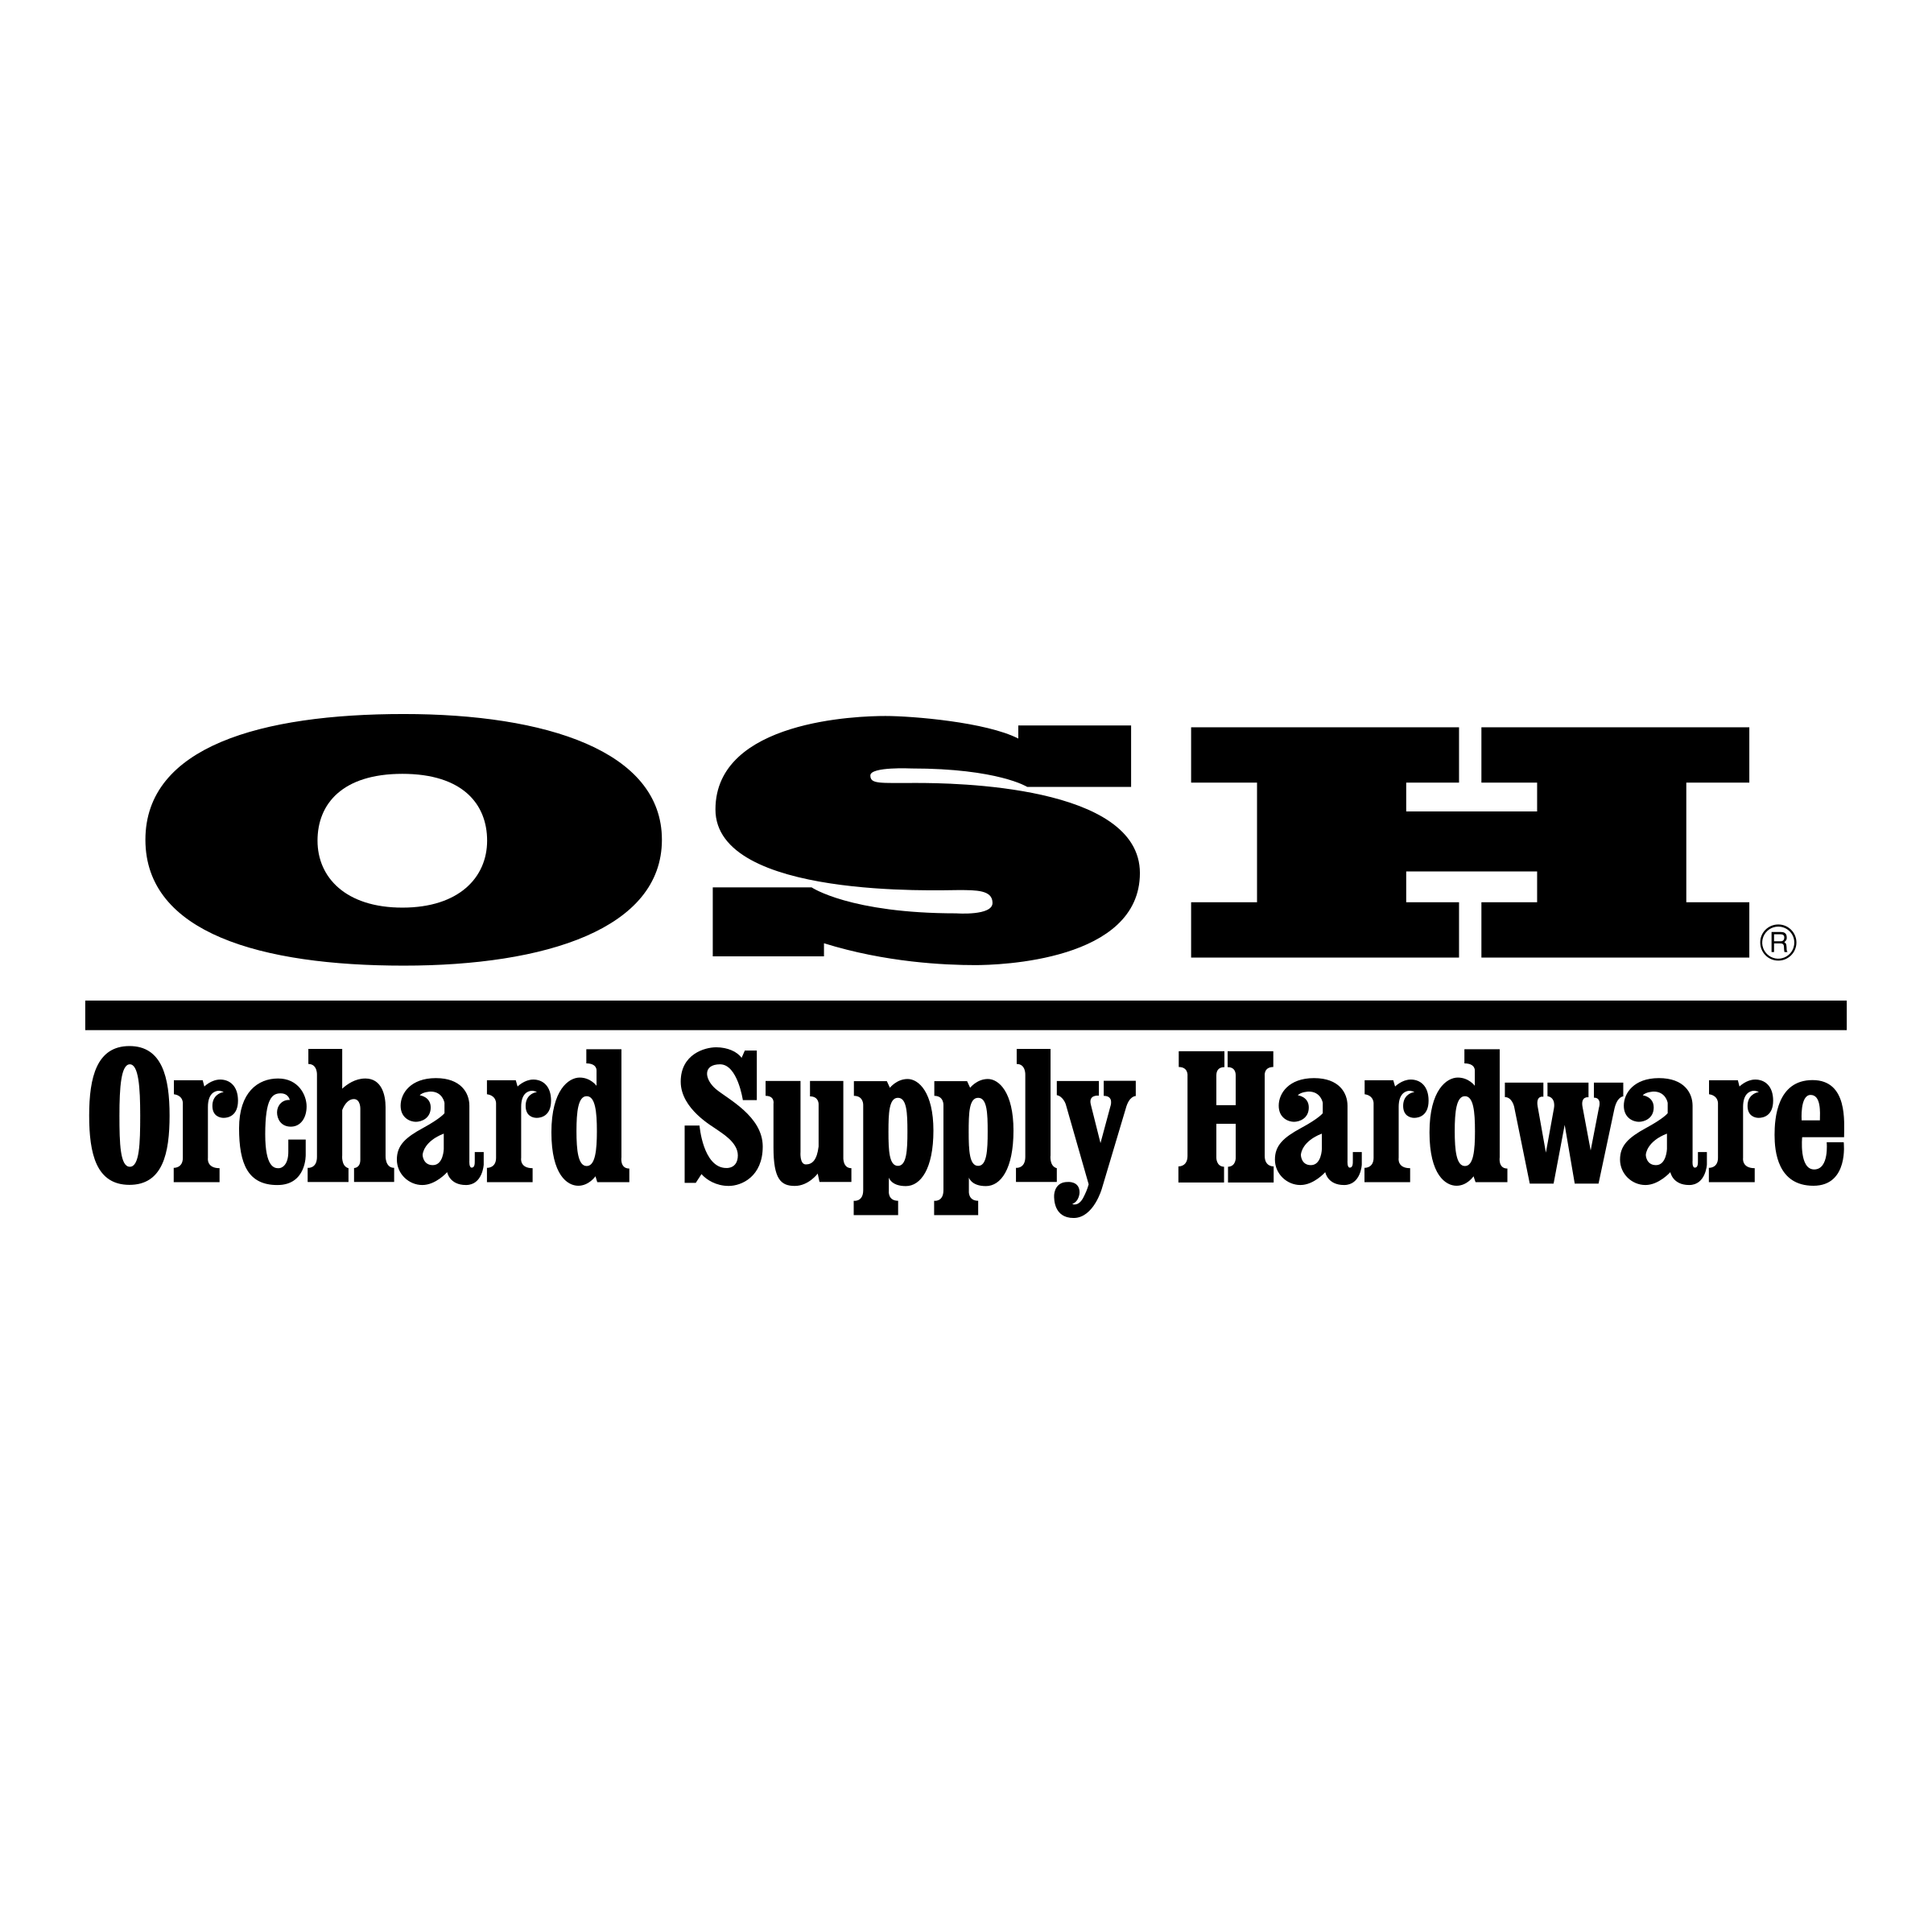 OSH Logo - OSH Logo PNG Transparent & SVG Vector - Freebie Supply